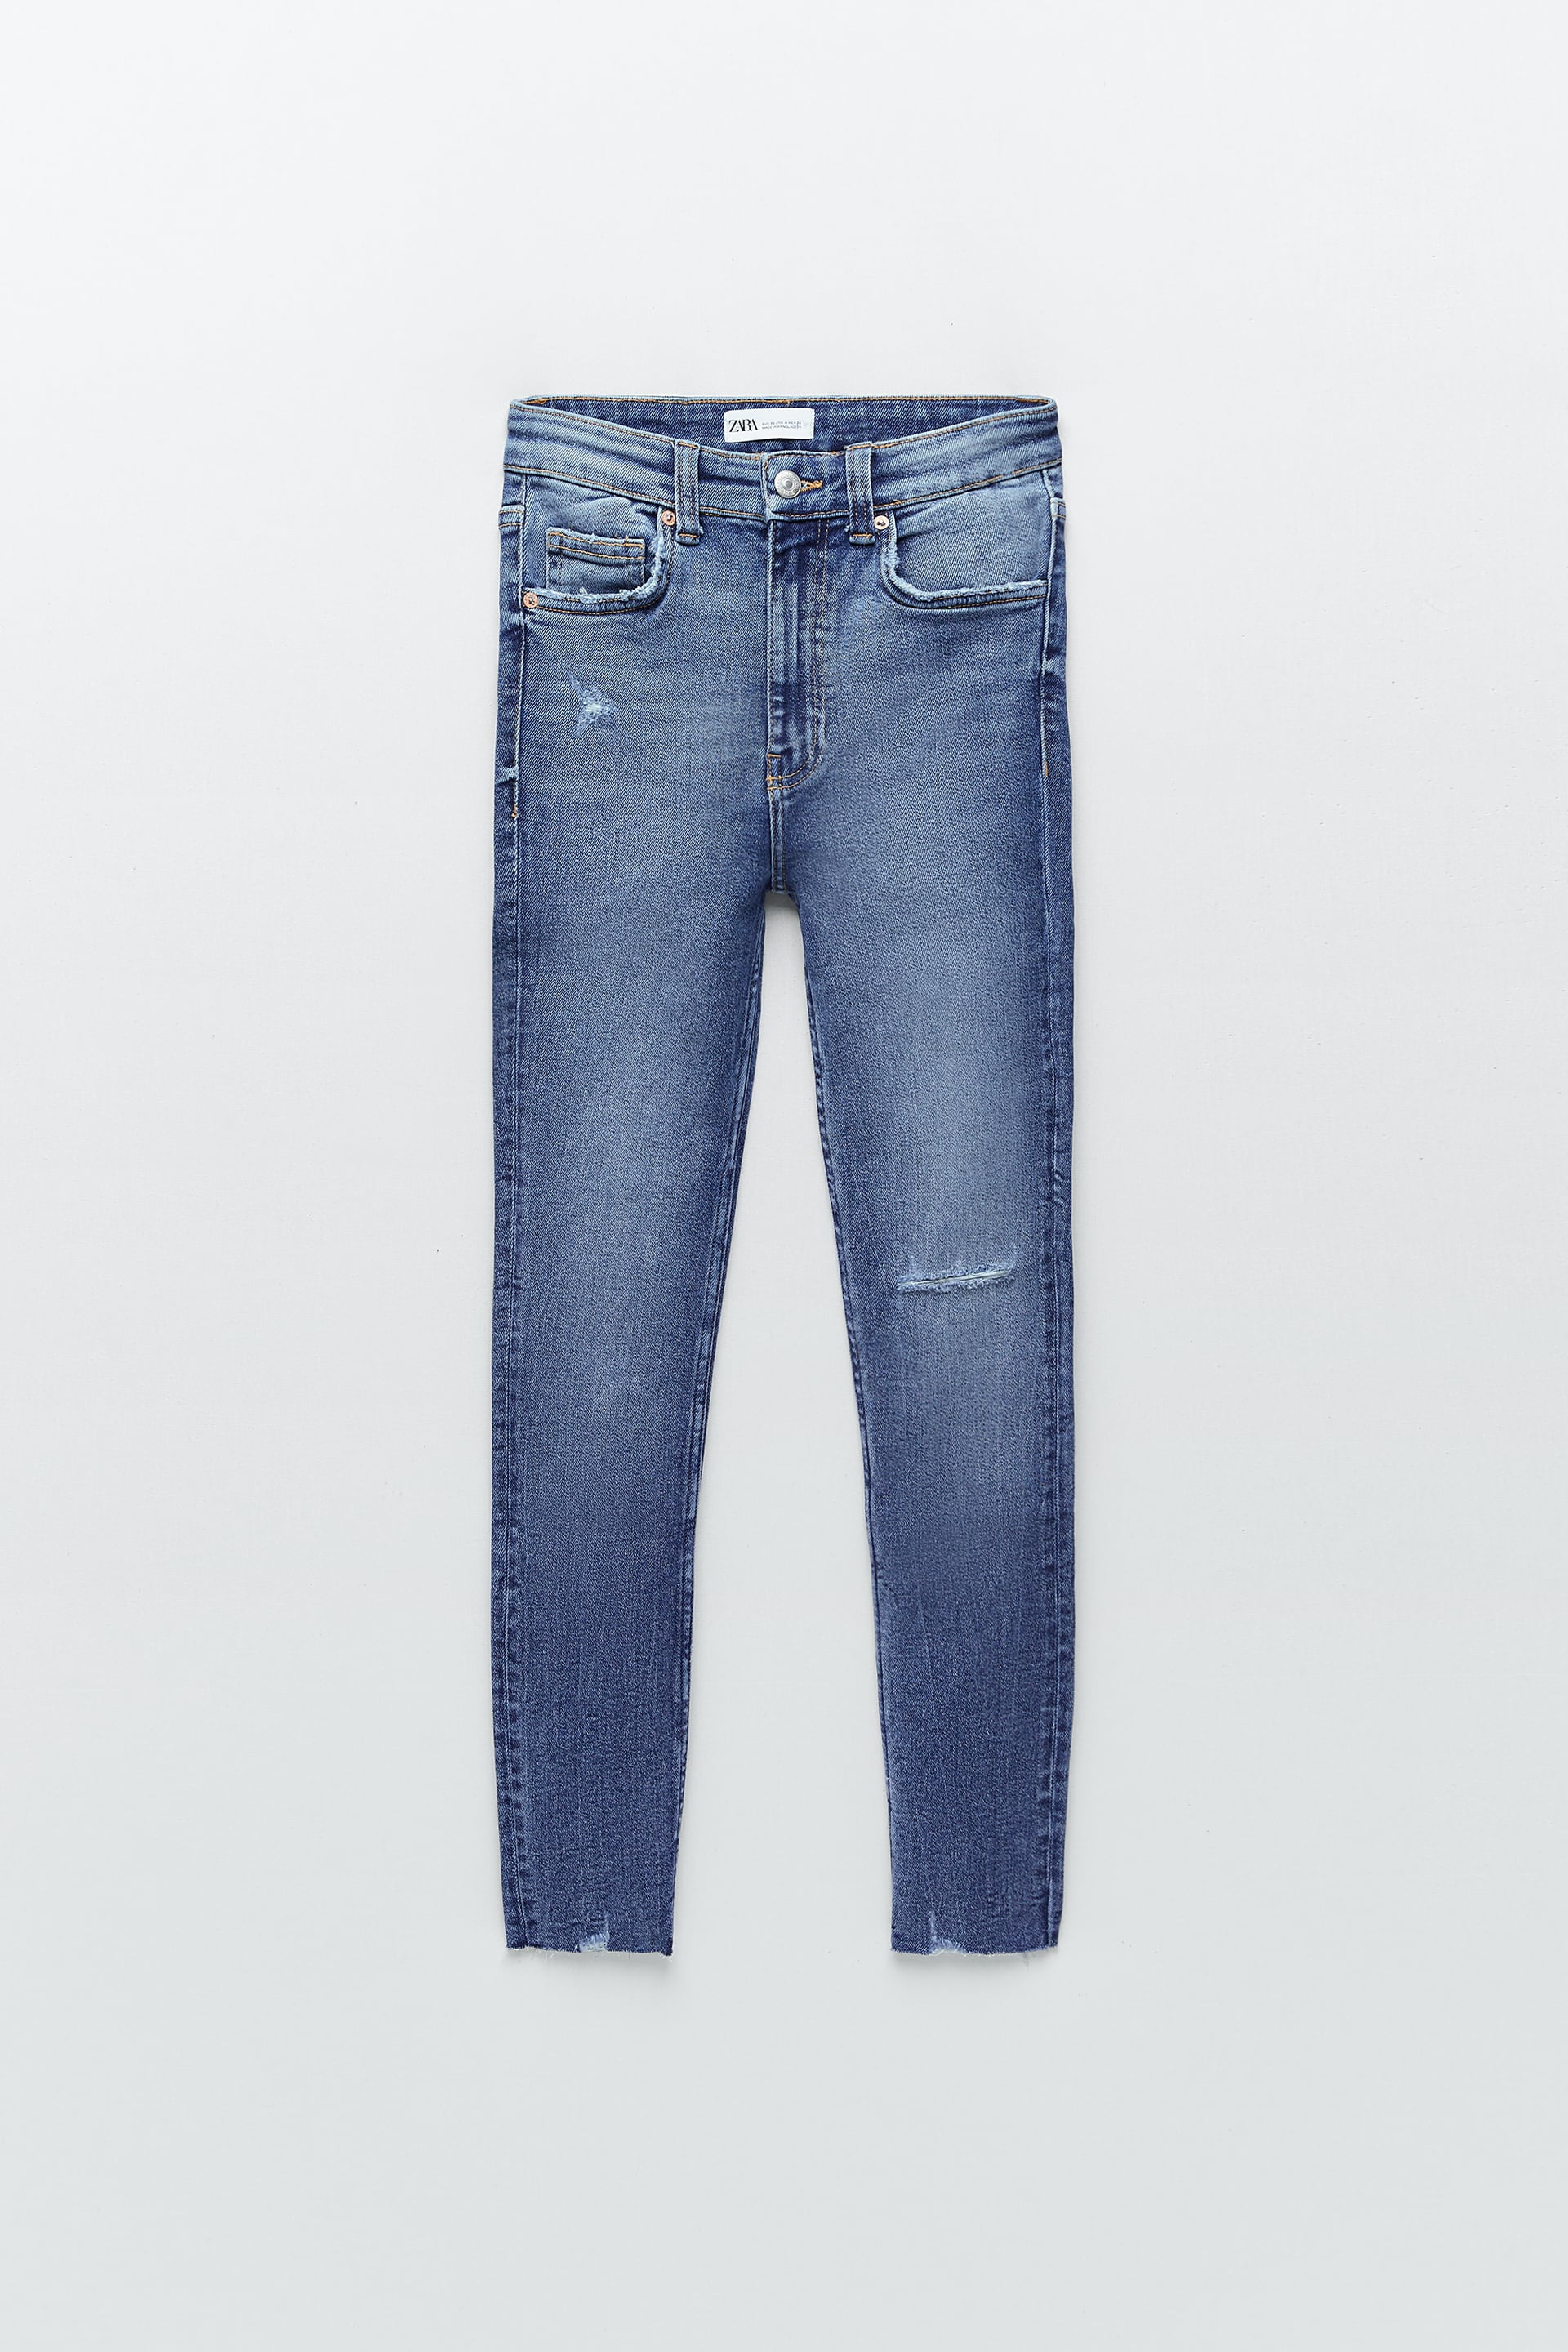 NEW Zara Blue Vintage Skinny Hi Rise Ankle Length Jeans ( Style-5520/024)  Size -8 (40) 